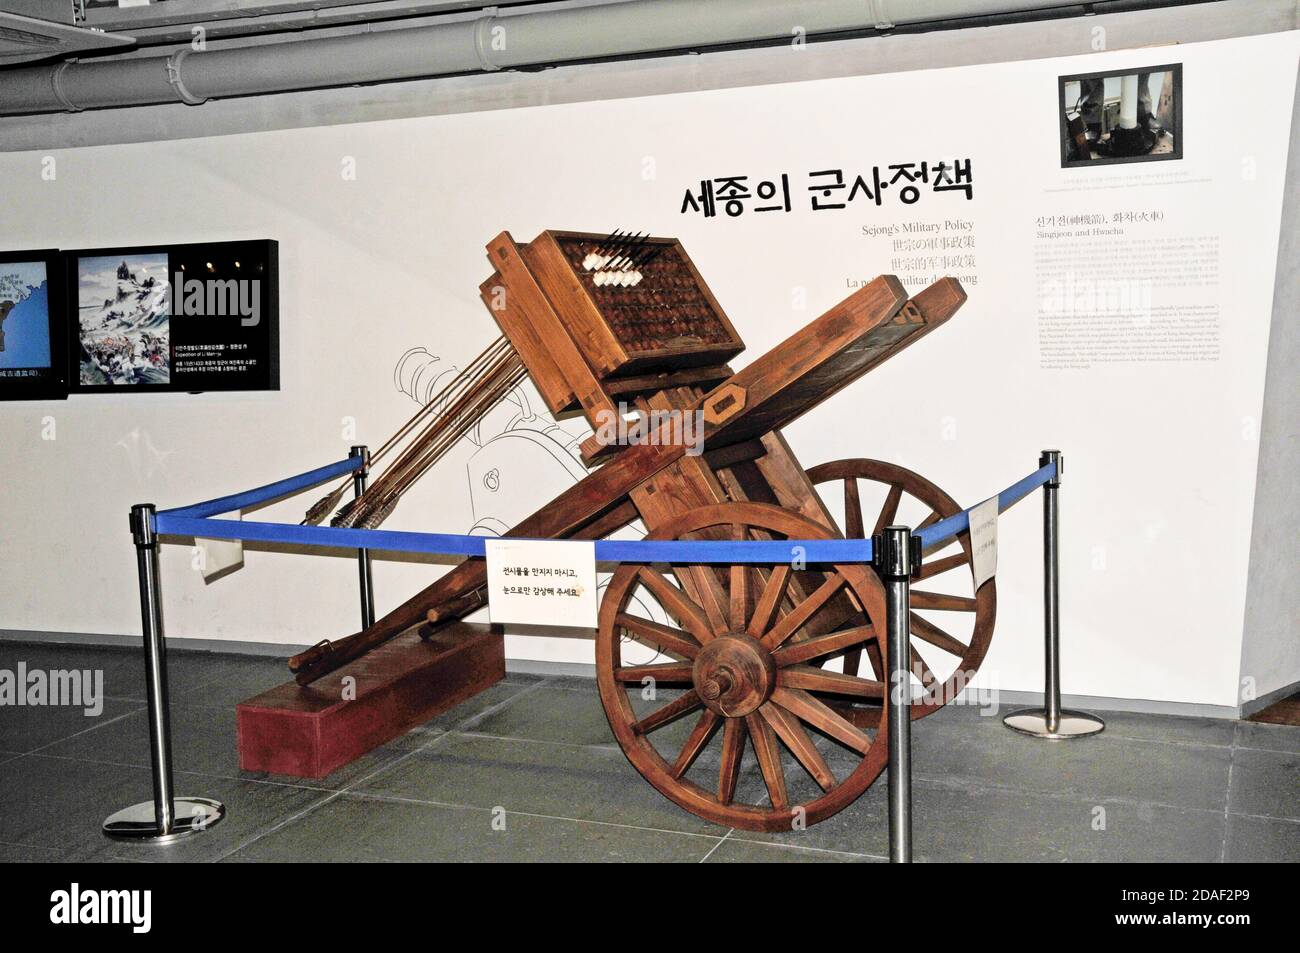 Military Weapon on display at the Story of King Sejong Memorial hall, Seoul, South Korea Stock Photo